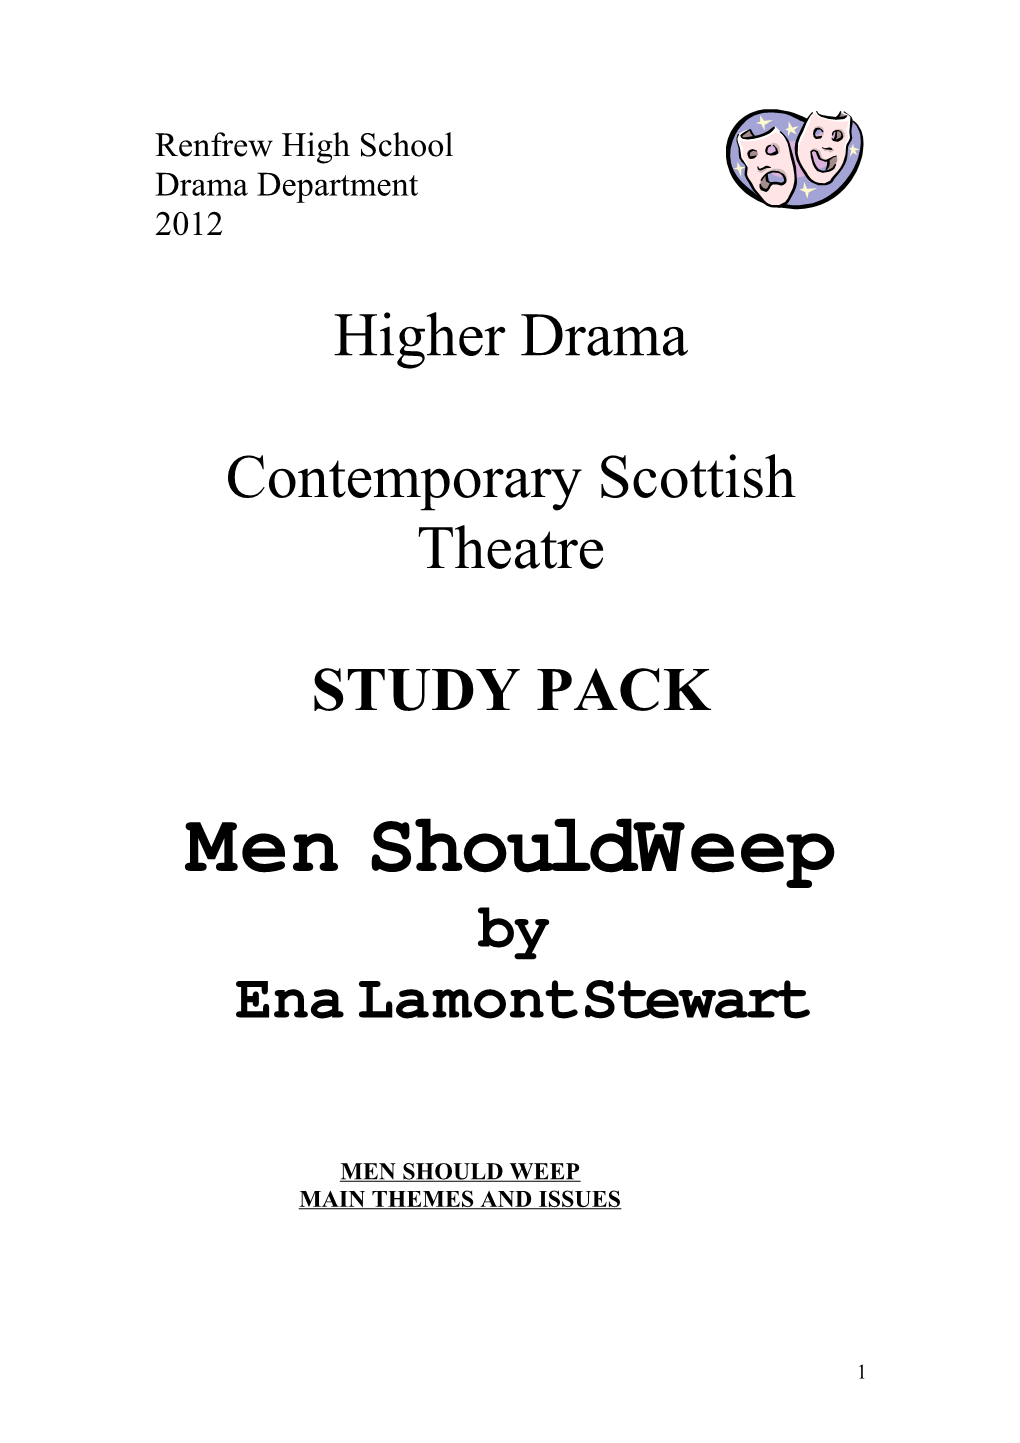 Ena Lamont Stewart and Men Should Weep